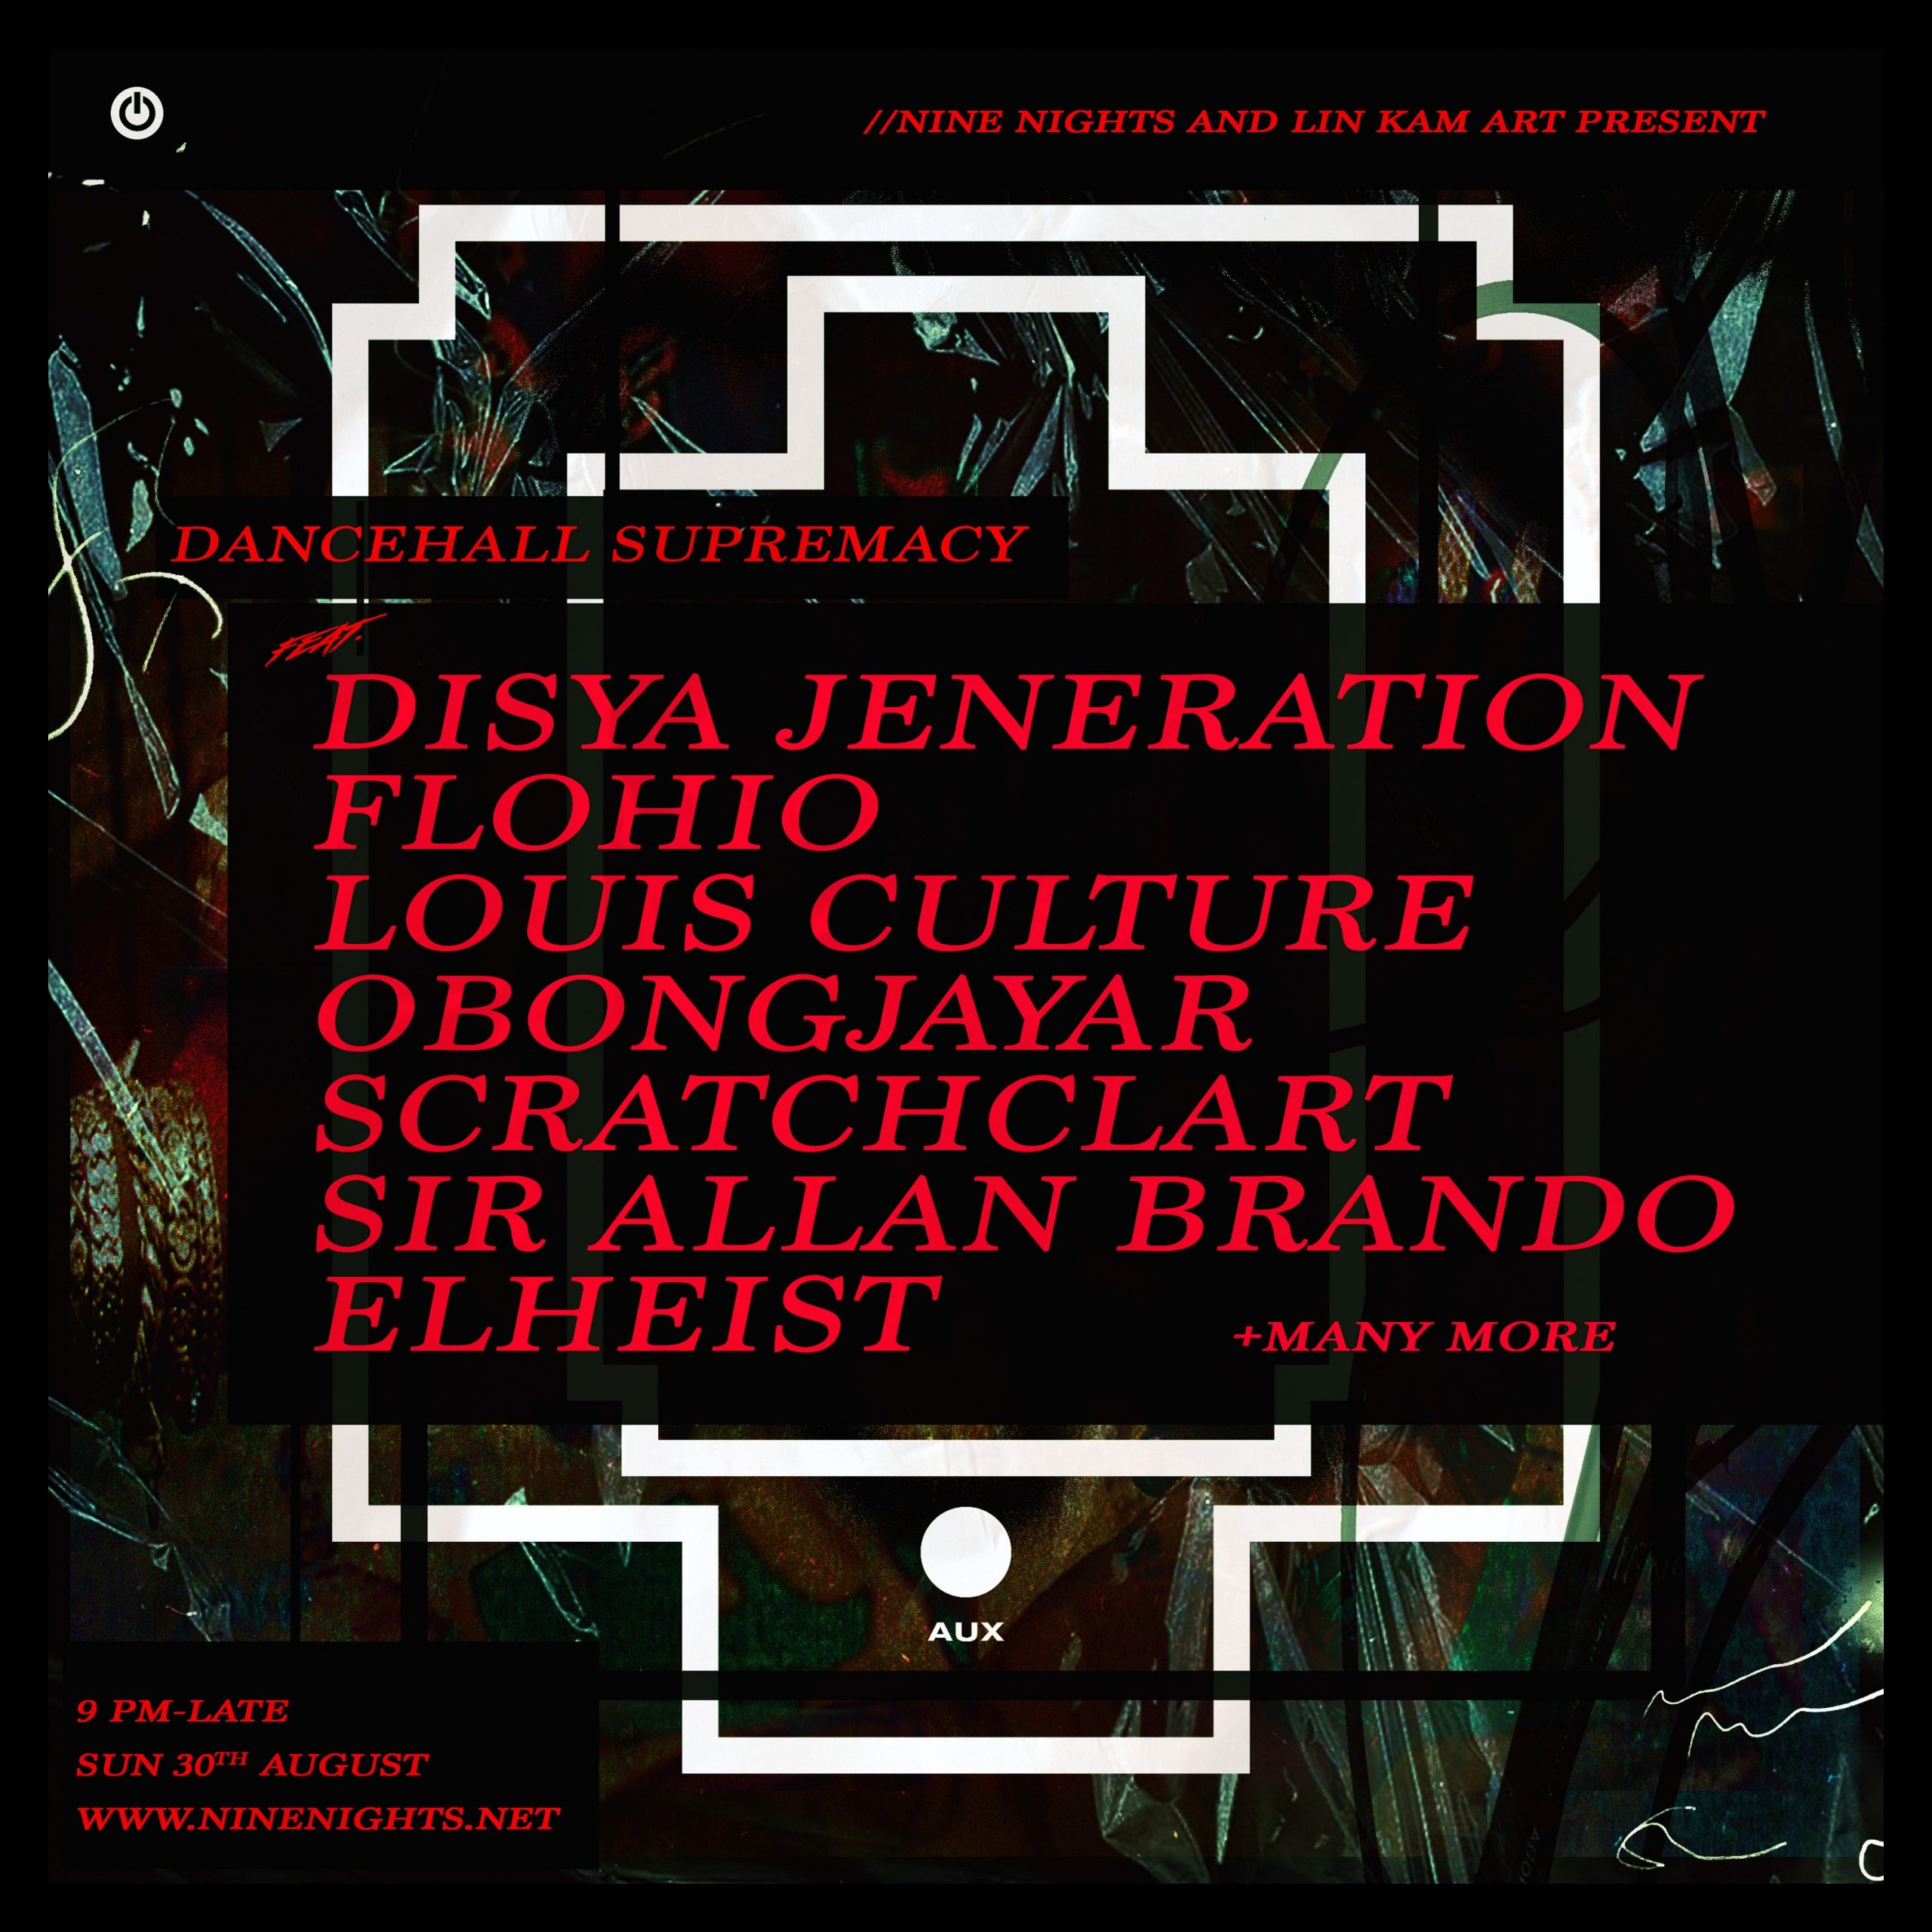 The flyer for the event. It lists: Disya Jeneration, Flohio, Louis Culture, Obongjayar, Scratchclart, Sir Allan Brando and Elheist.